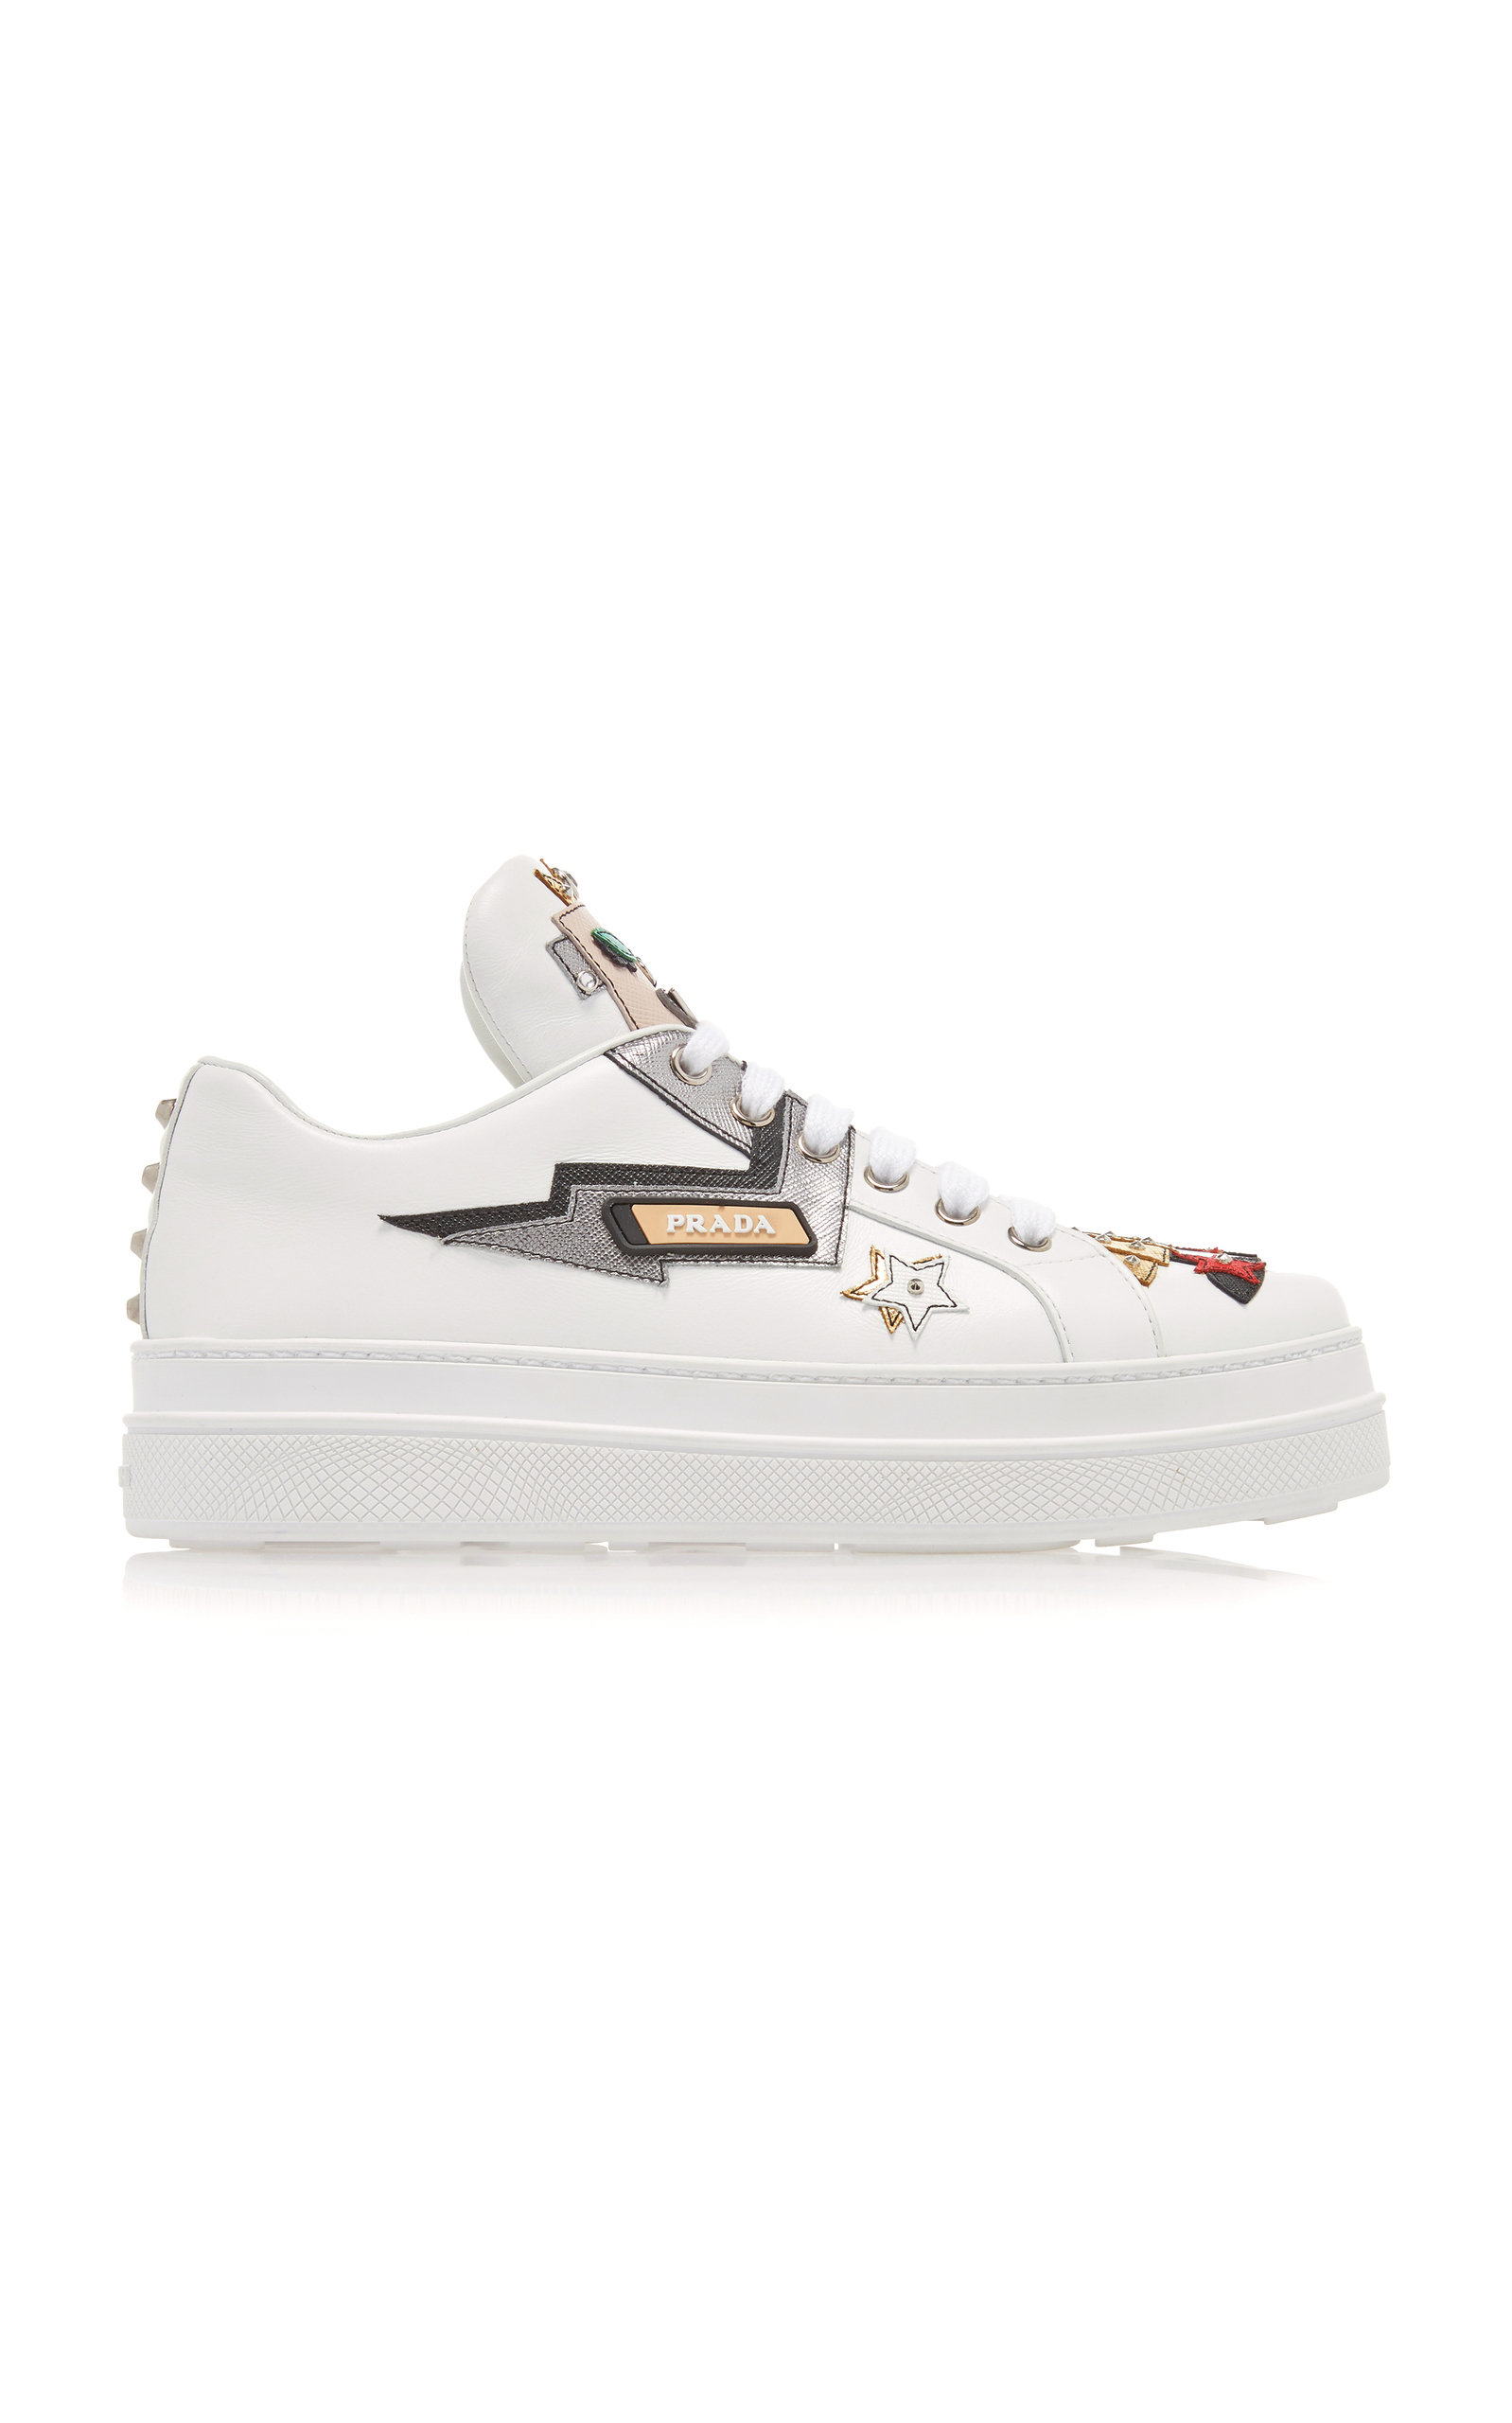 Prada - Women's Appliquéd Leather Platform Sneakers - White - IT 35 - Moda Operandi